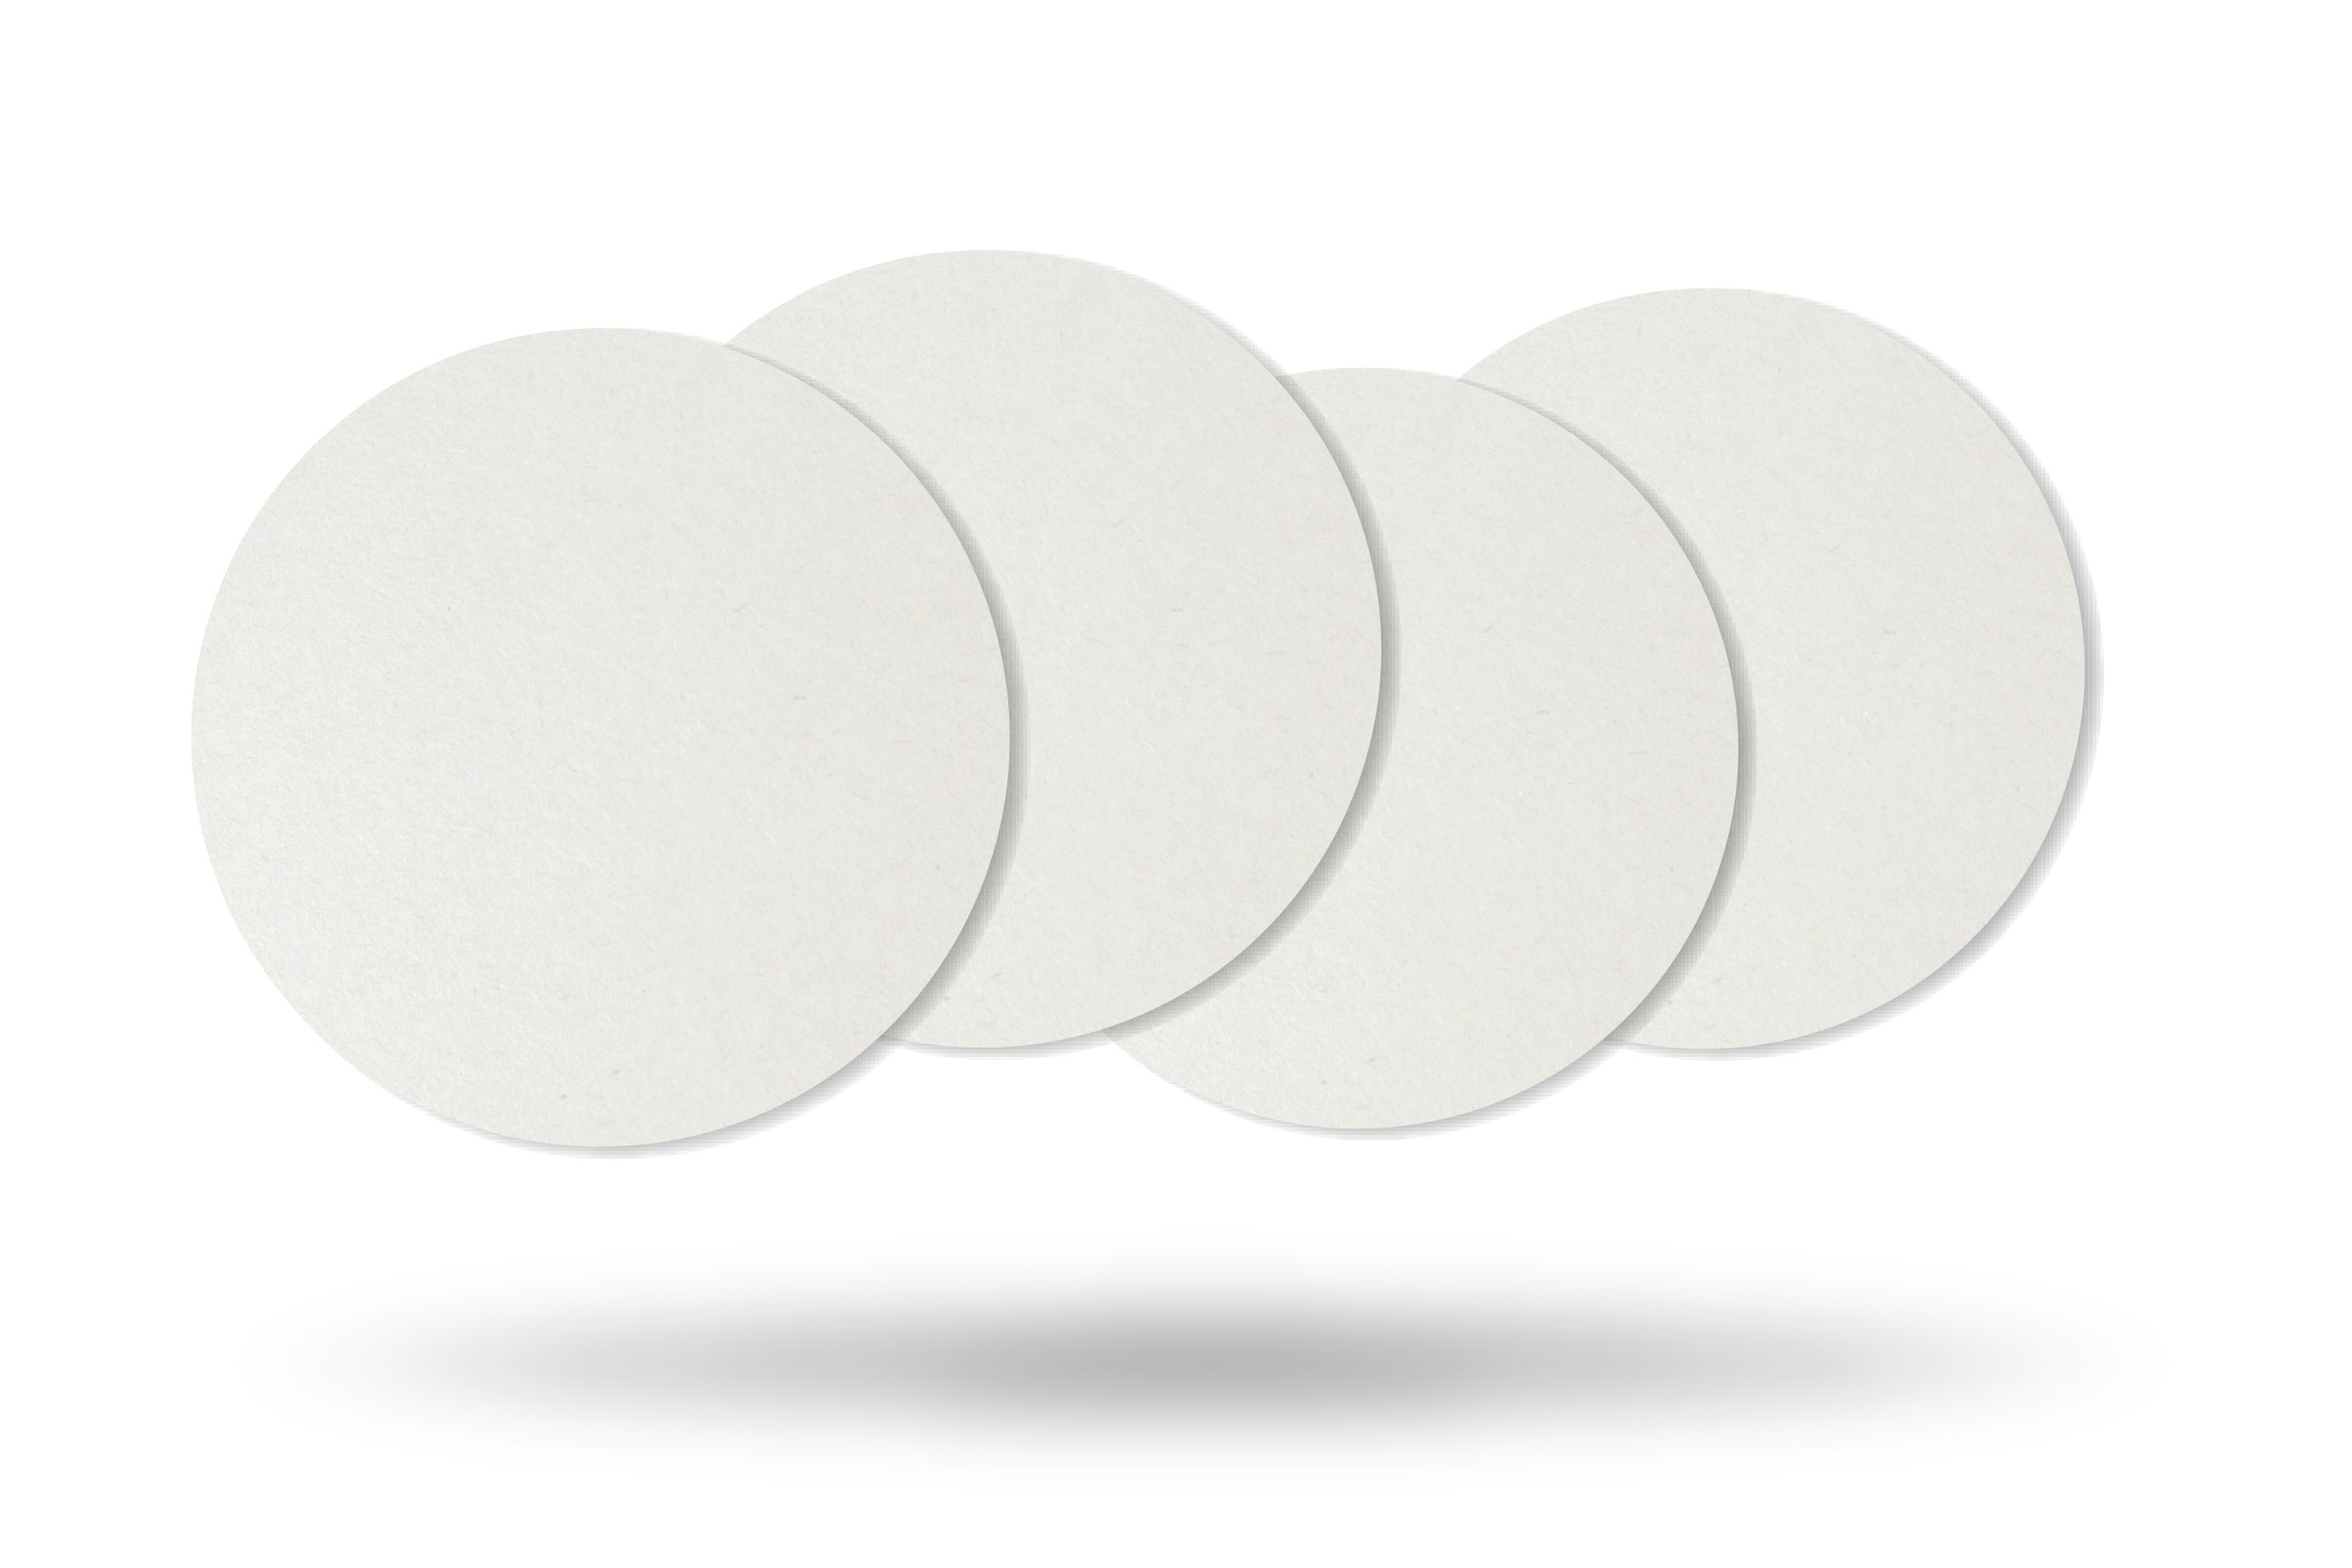 Blank White Coasters (on black rubber base) - Regol-G Industries